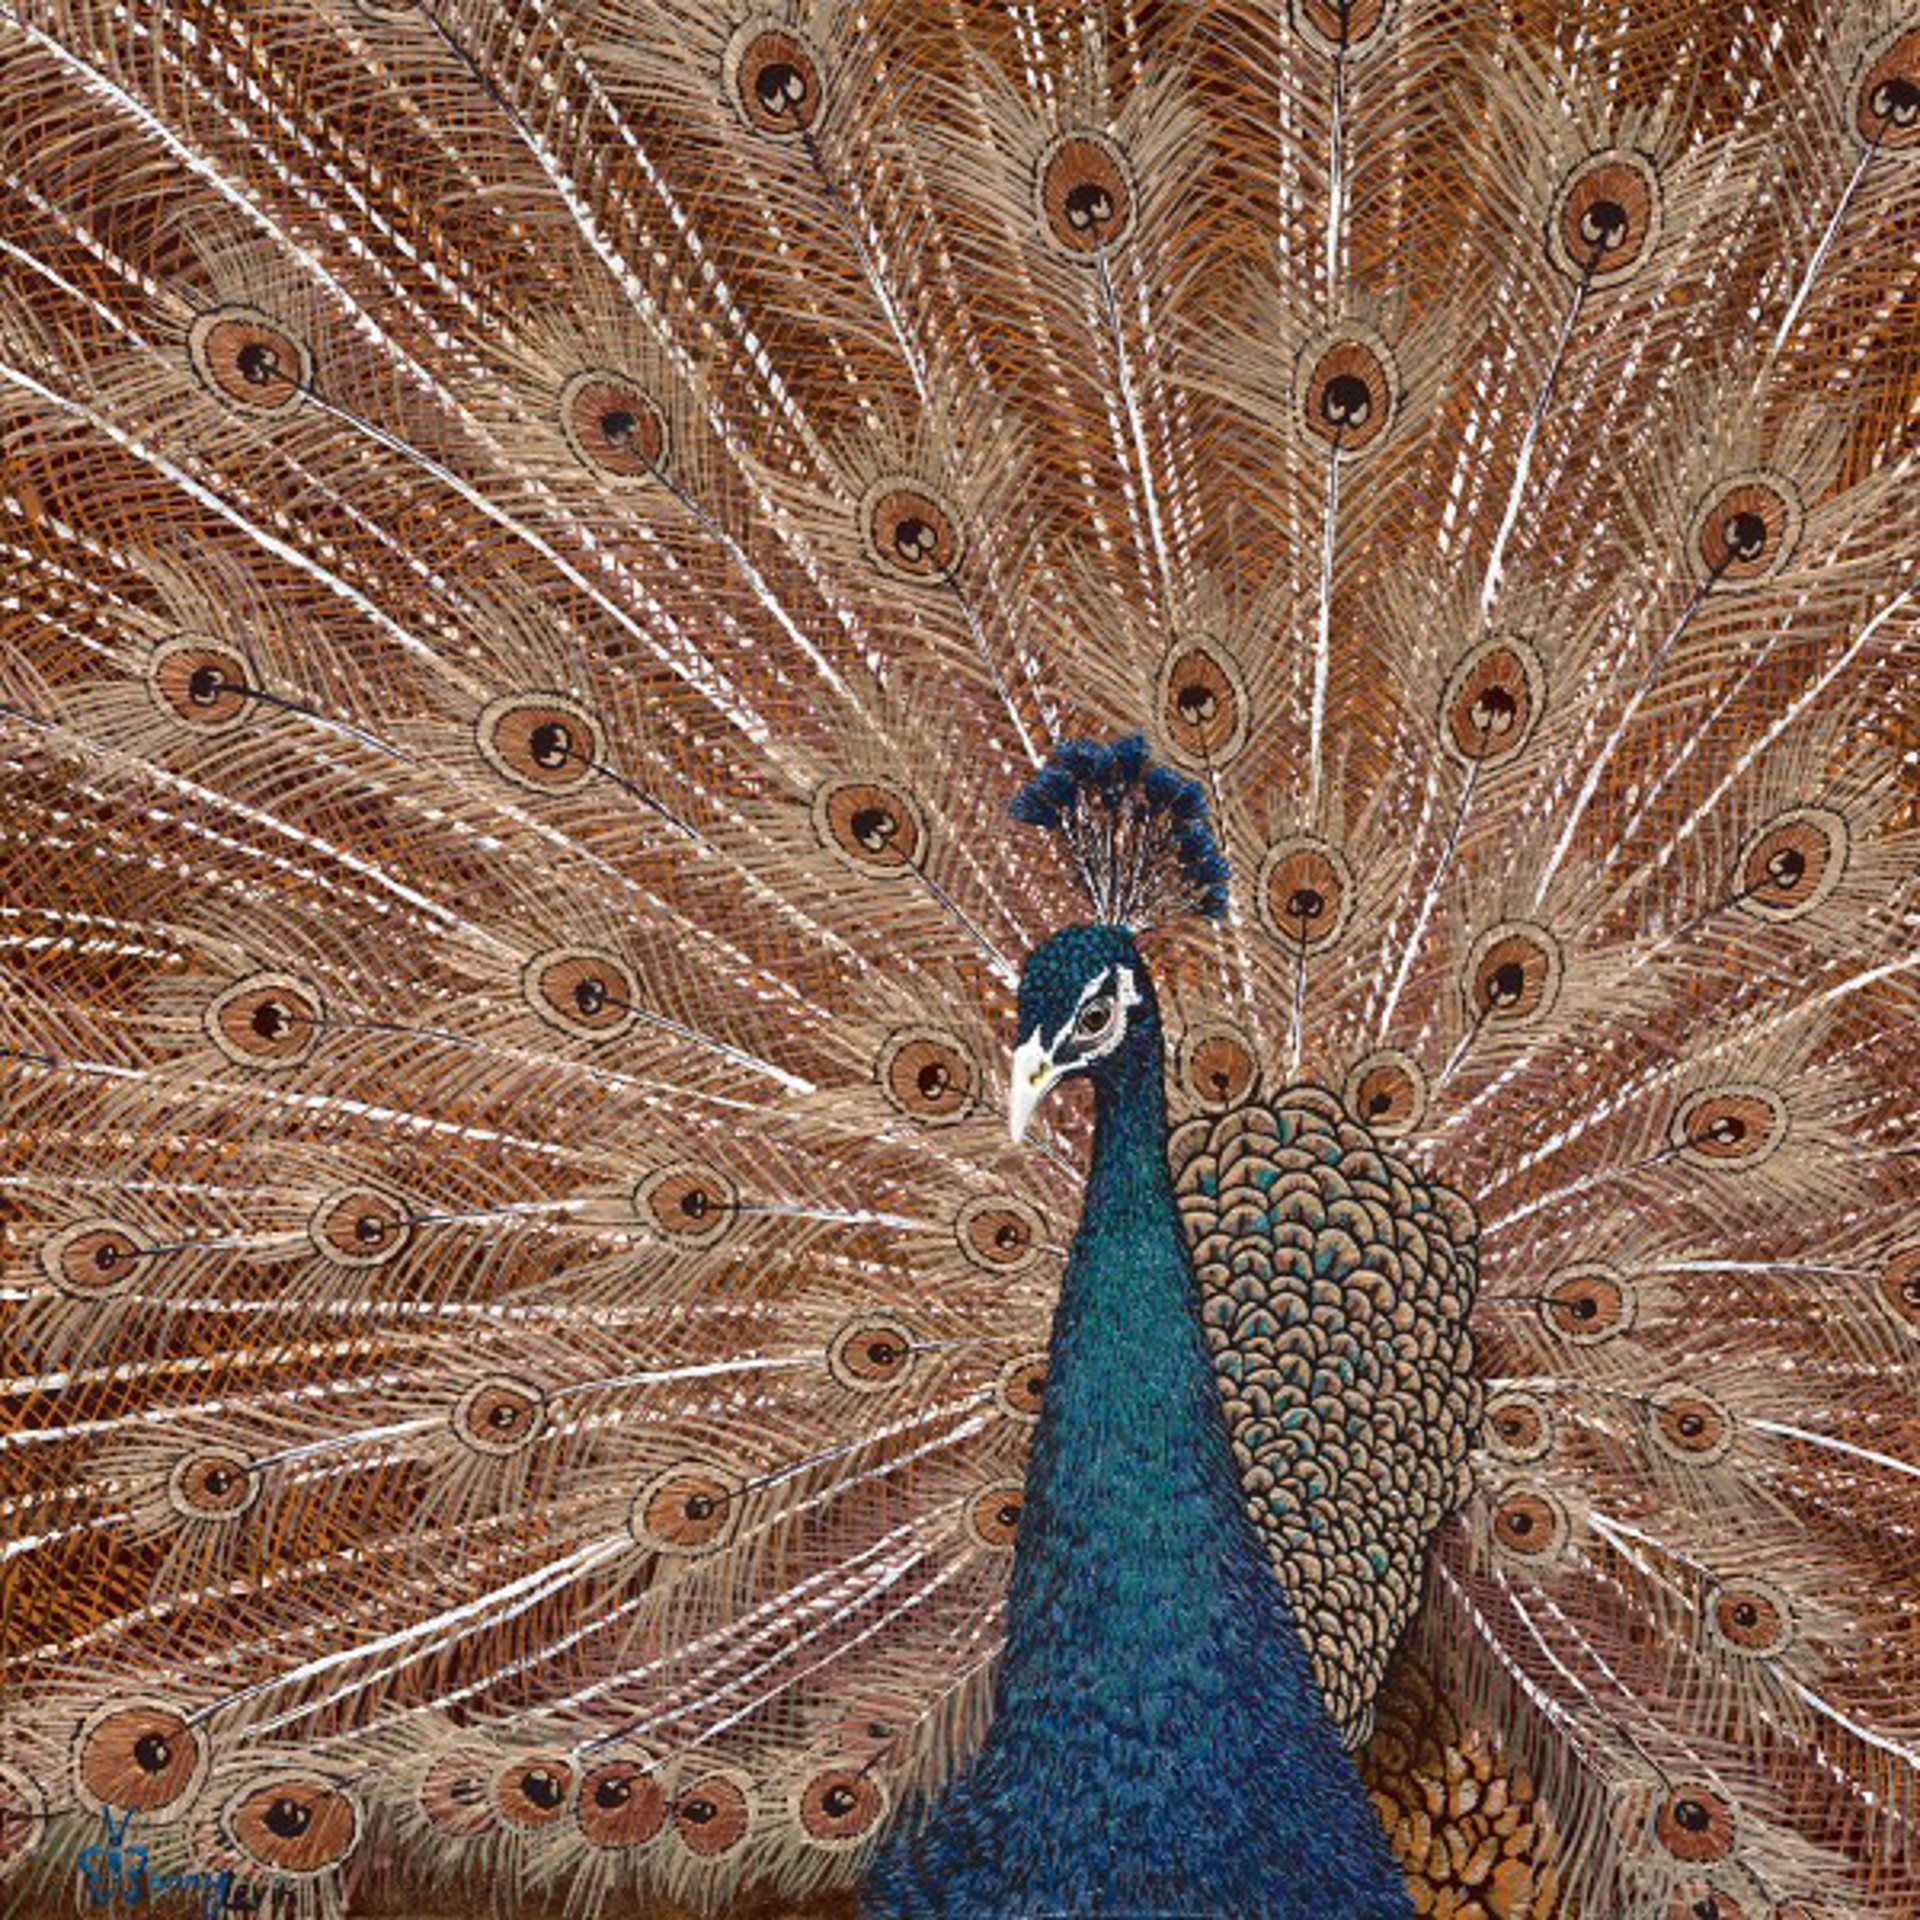 Indigo Peacock by Barry Levin